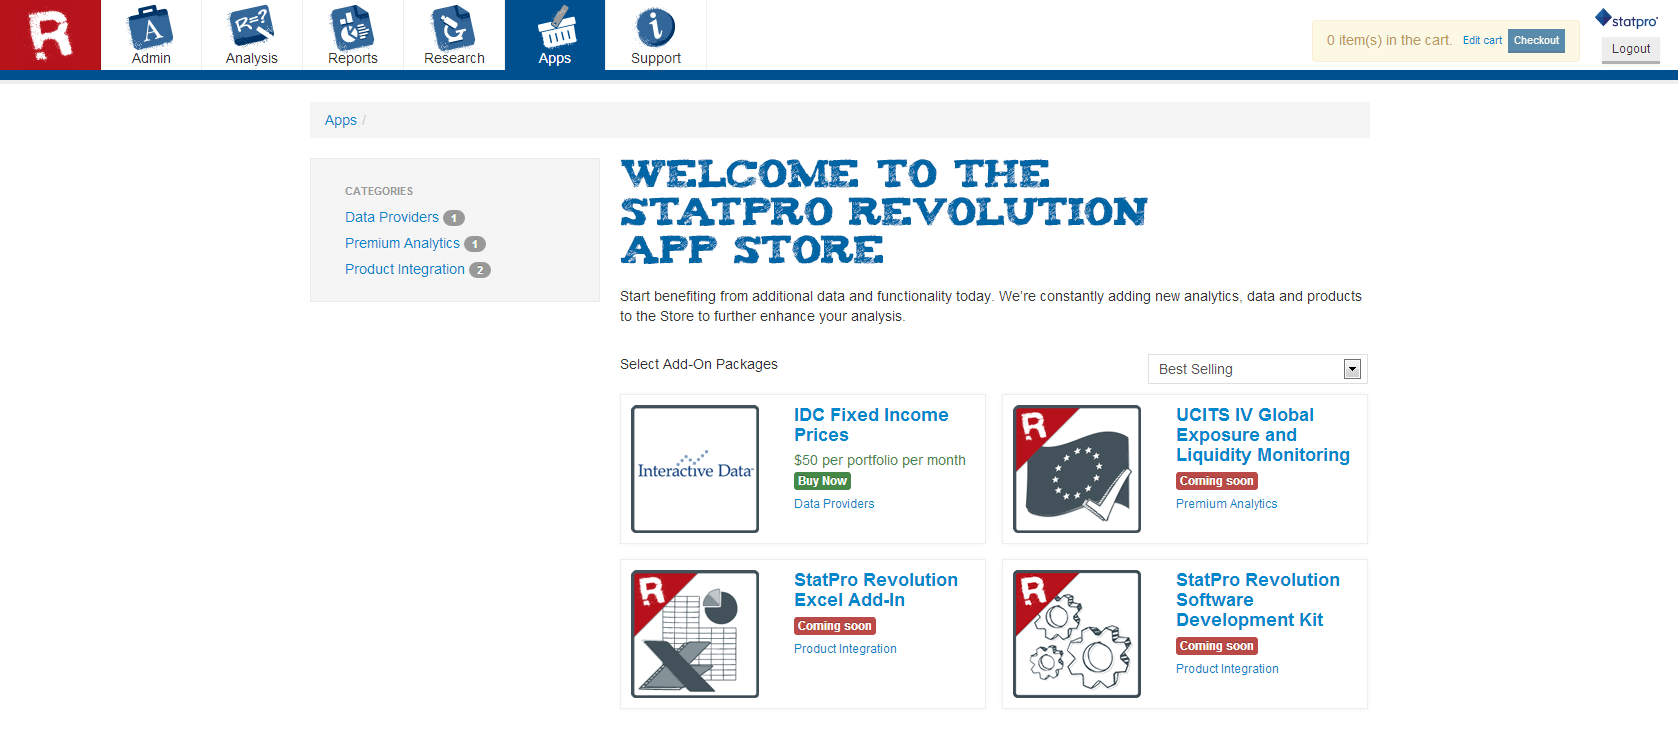 StatPro Revolution App Store screenshot